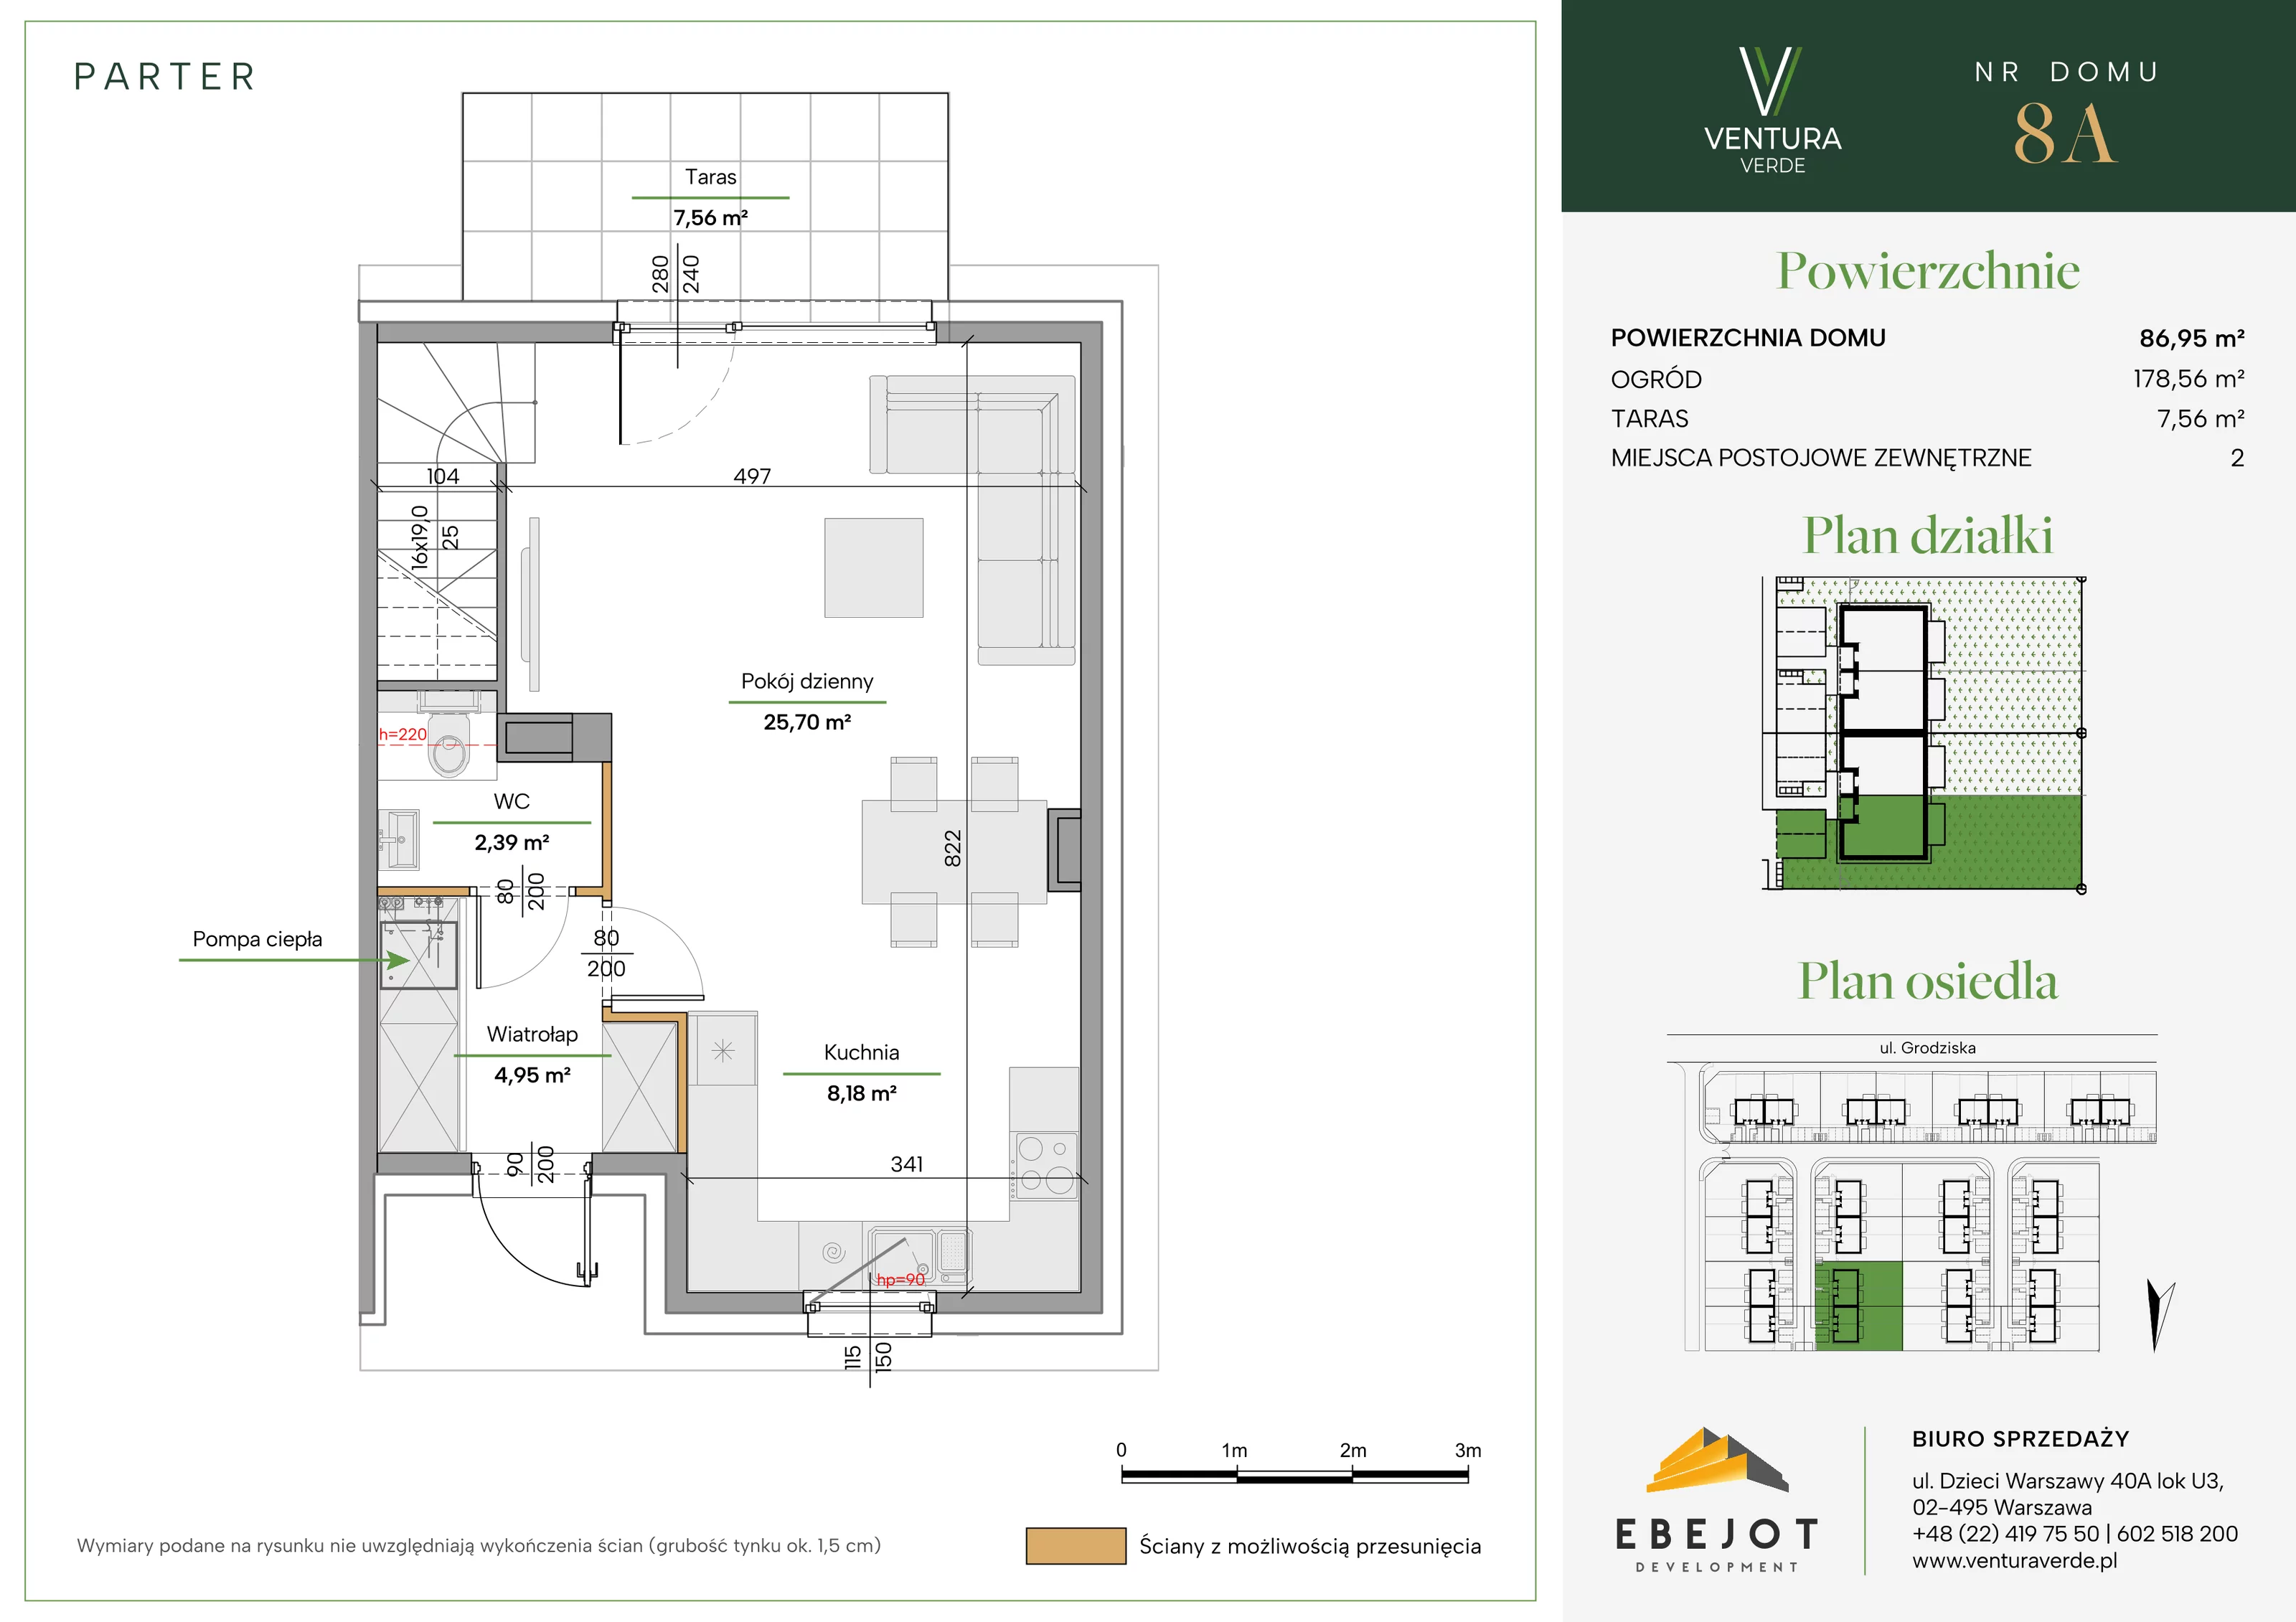 Dom 86,95 m², oferta nr 8A, Ventura Verde II, Stara Wieś, ul. Grodziska